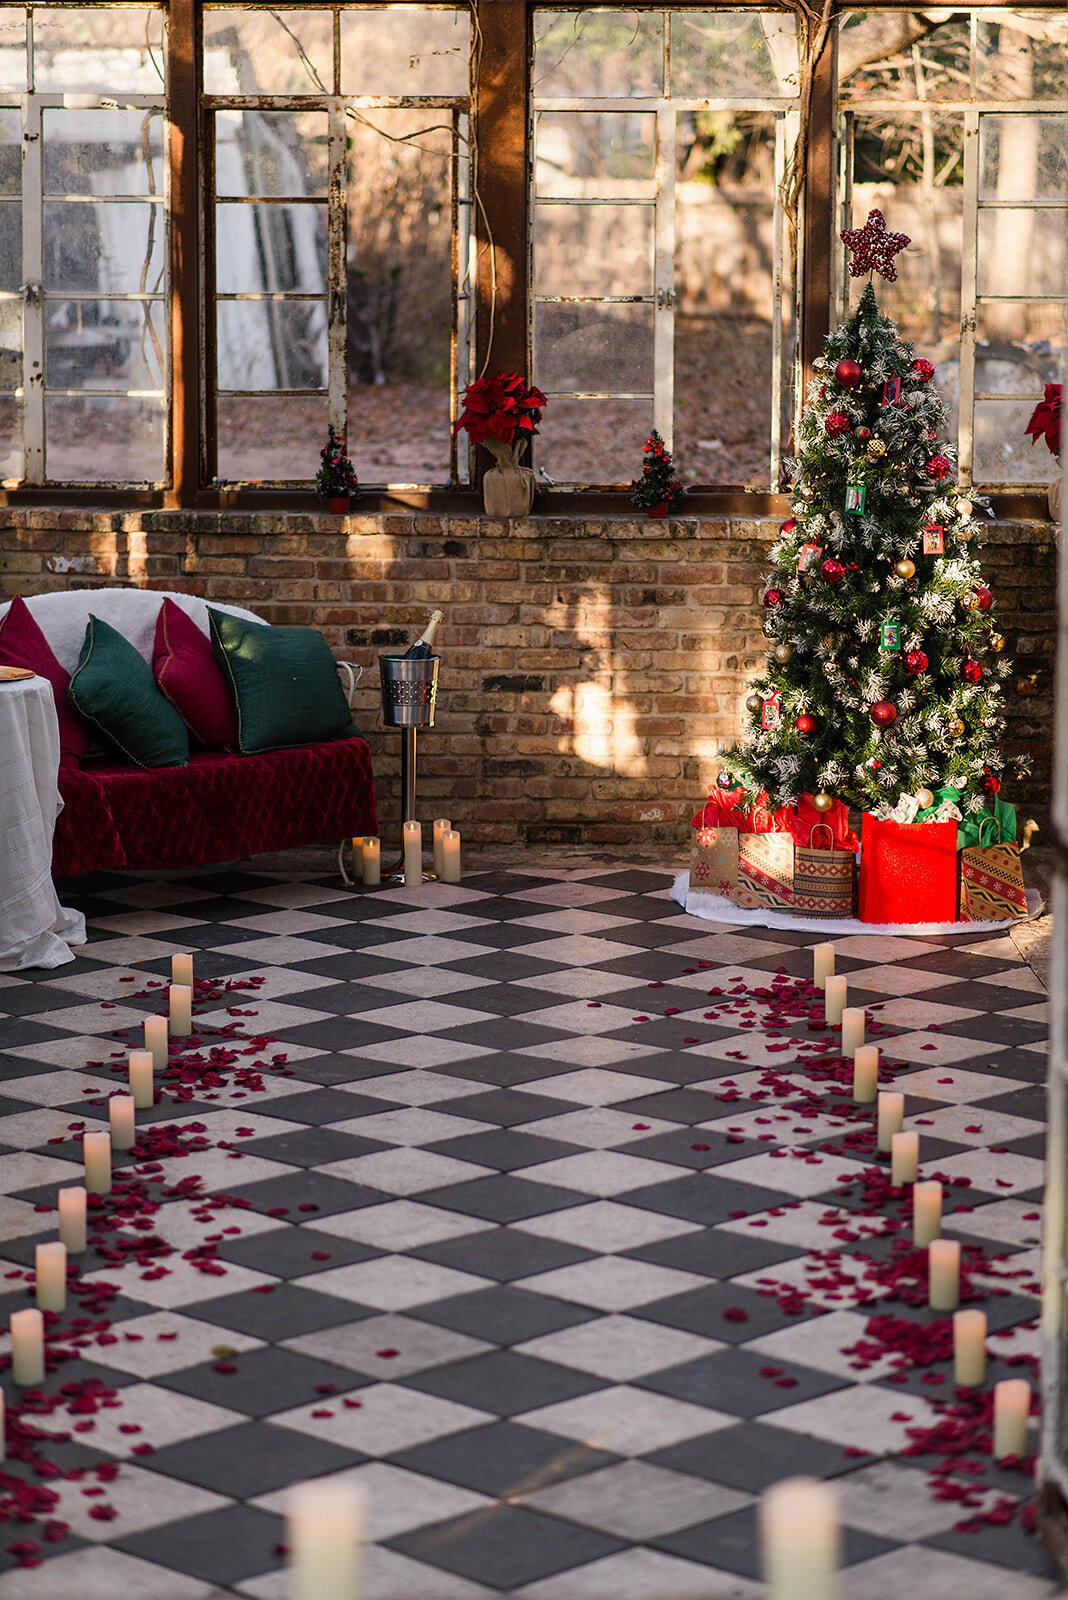 Plan the perfect proposal candlelit walkway to Christmas tree